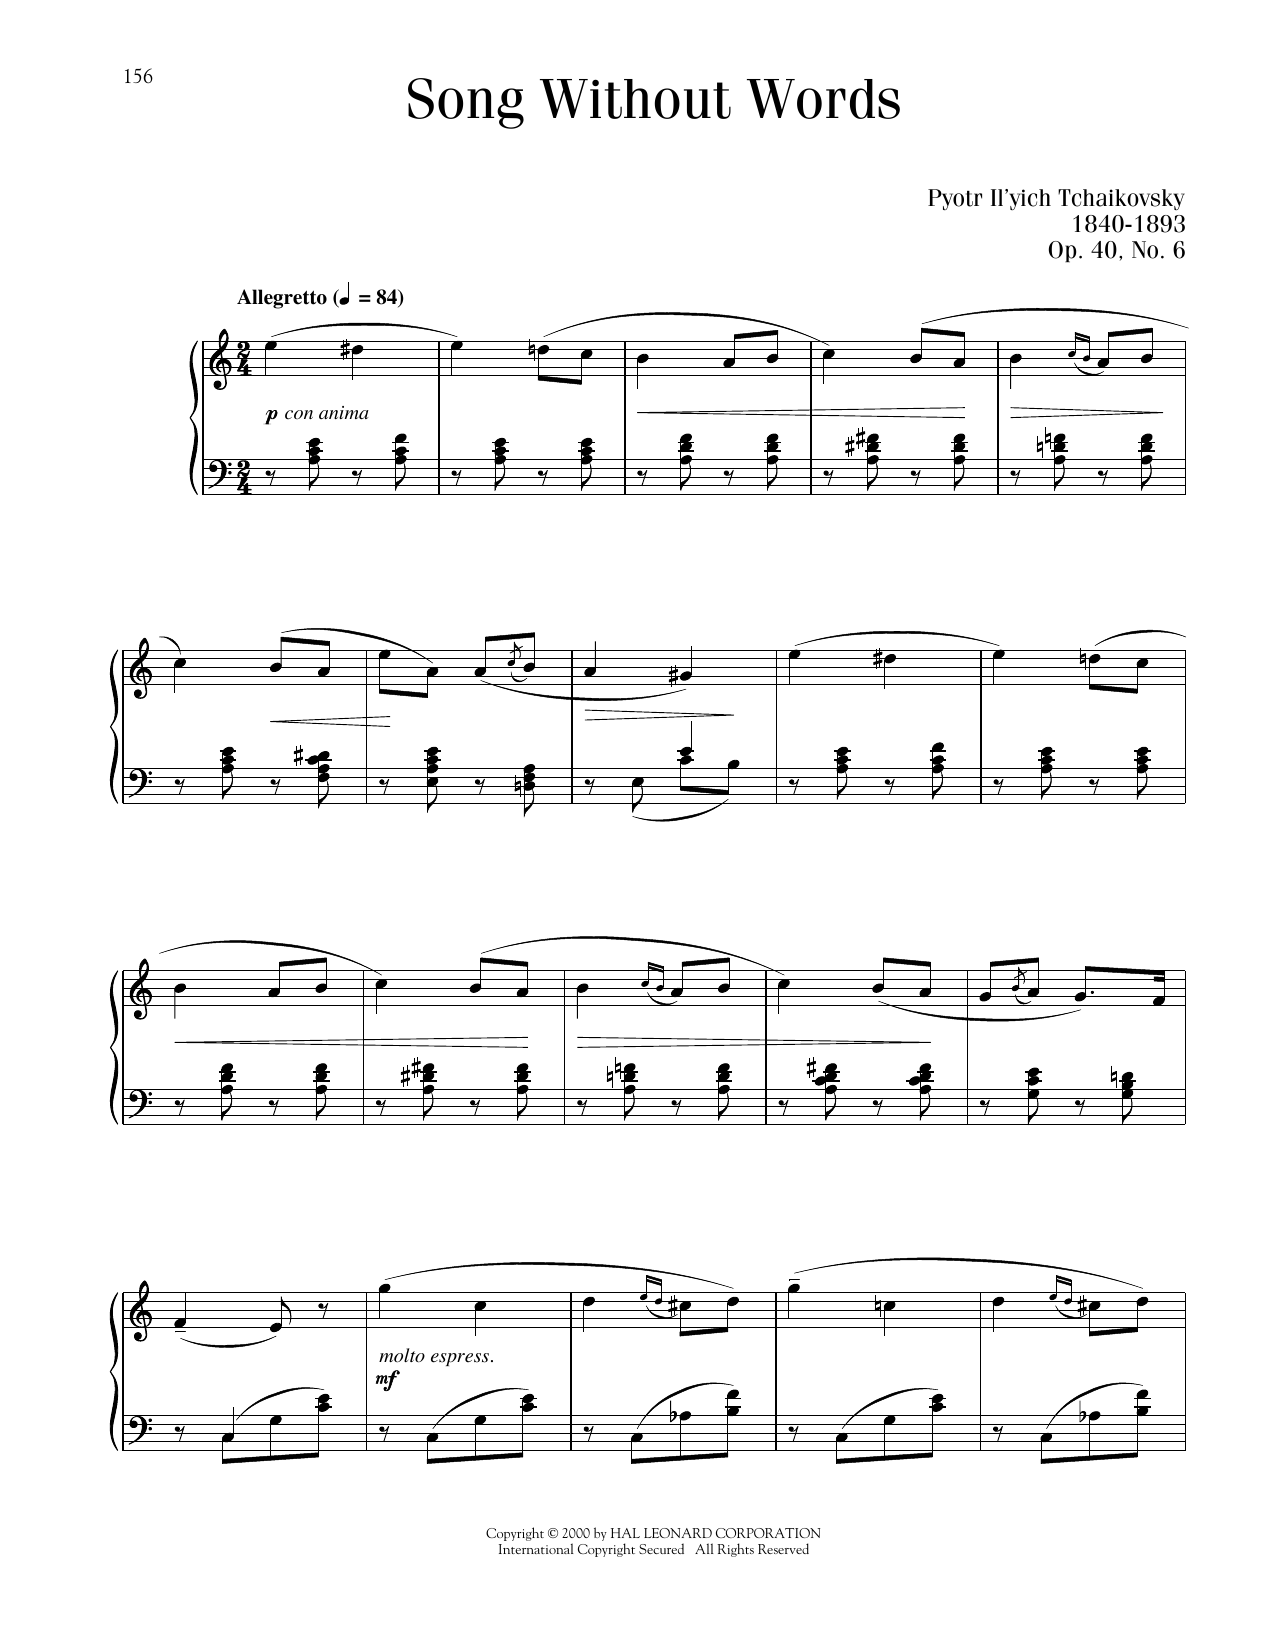 Pyotr Il'yich Tchaikovsky Chant Sans Paroles, Op. 40, No. 6 sheet music notes printable PDF score